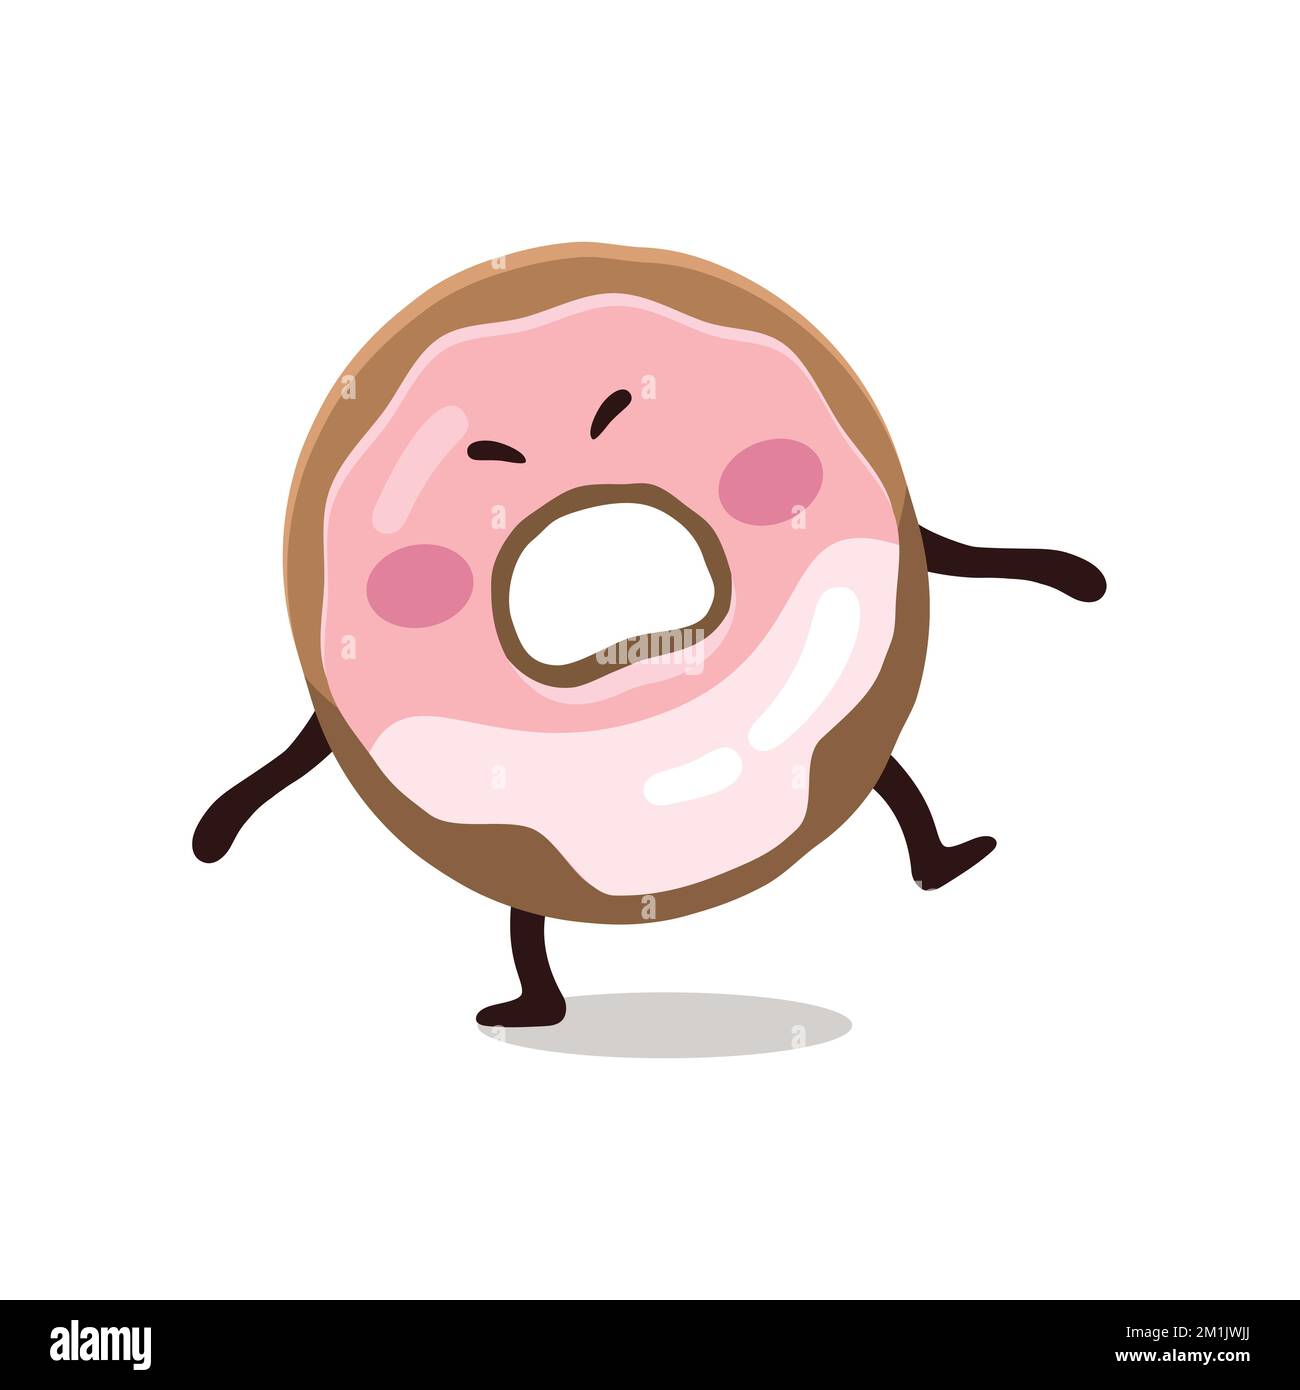 Funny vector flat cartoon kid's character sticker, illustration, mascot, icon, emoji of pink glazed sumo wrestler donut Stock Vector